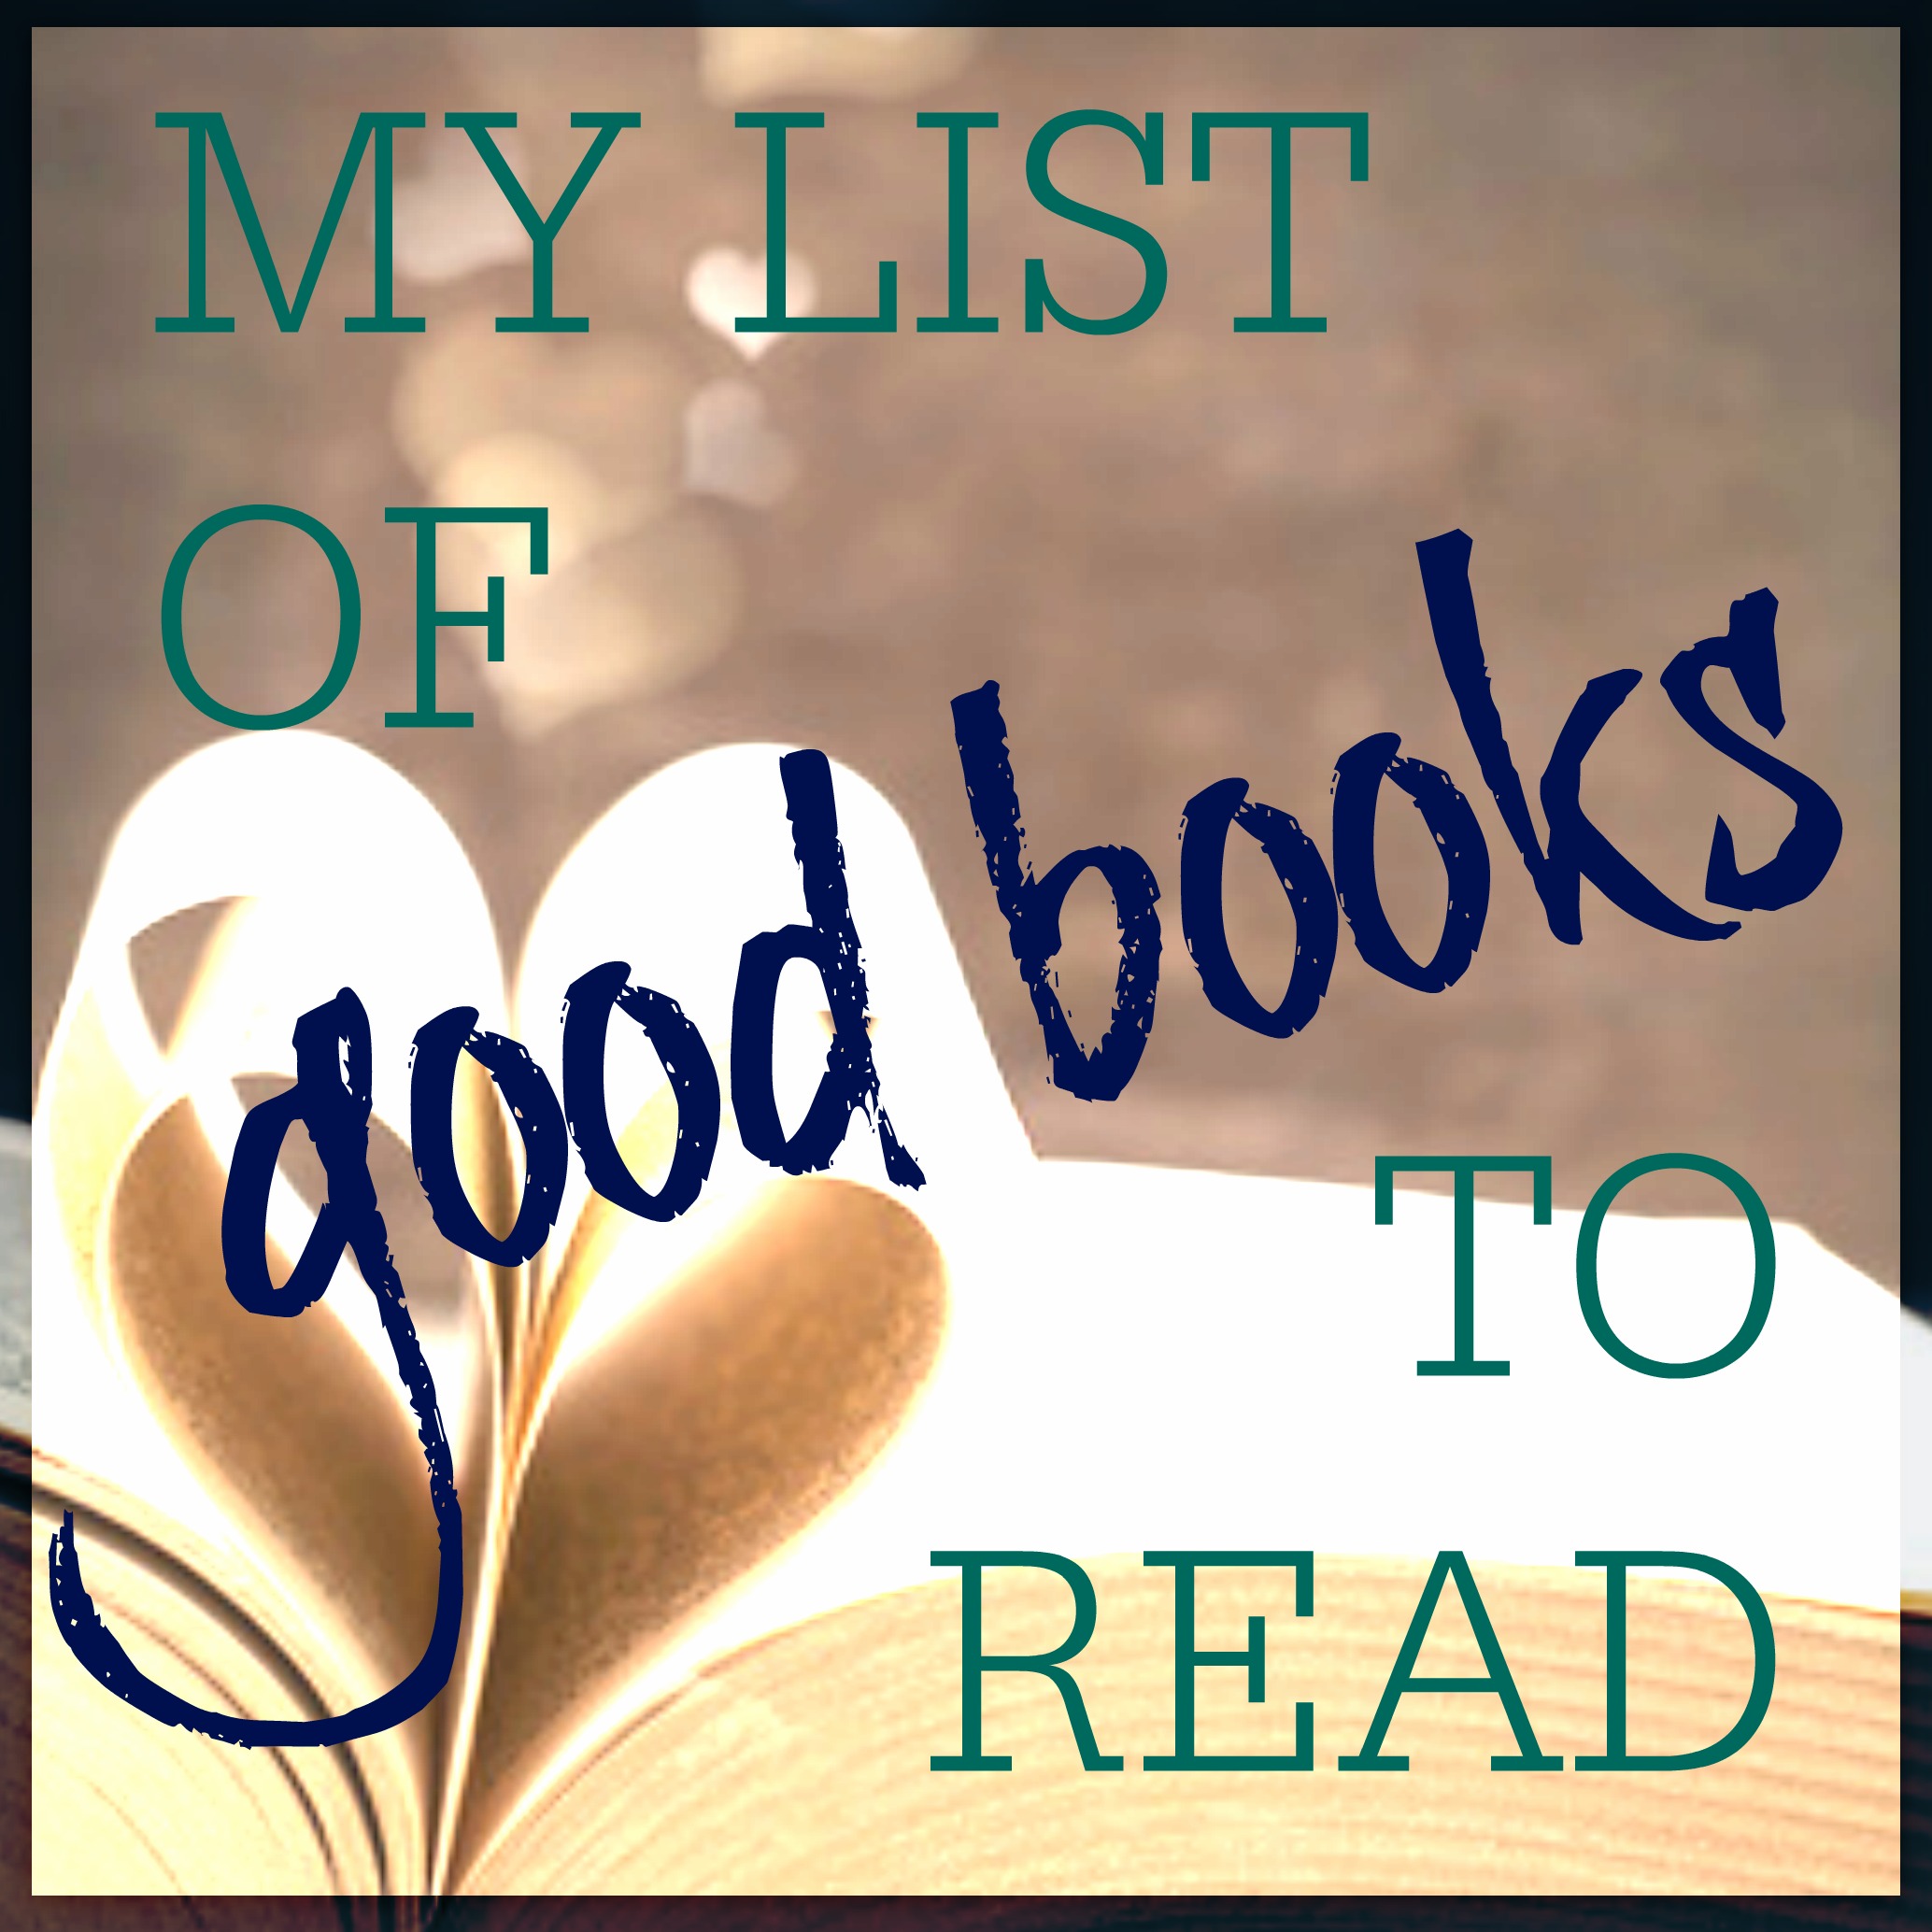 Book Reviews Kiss my List